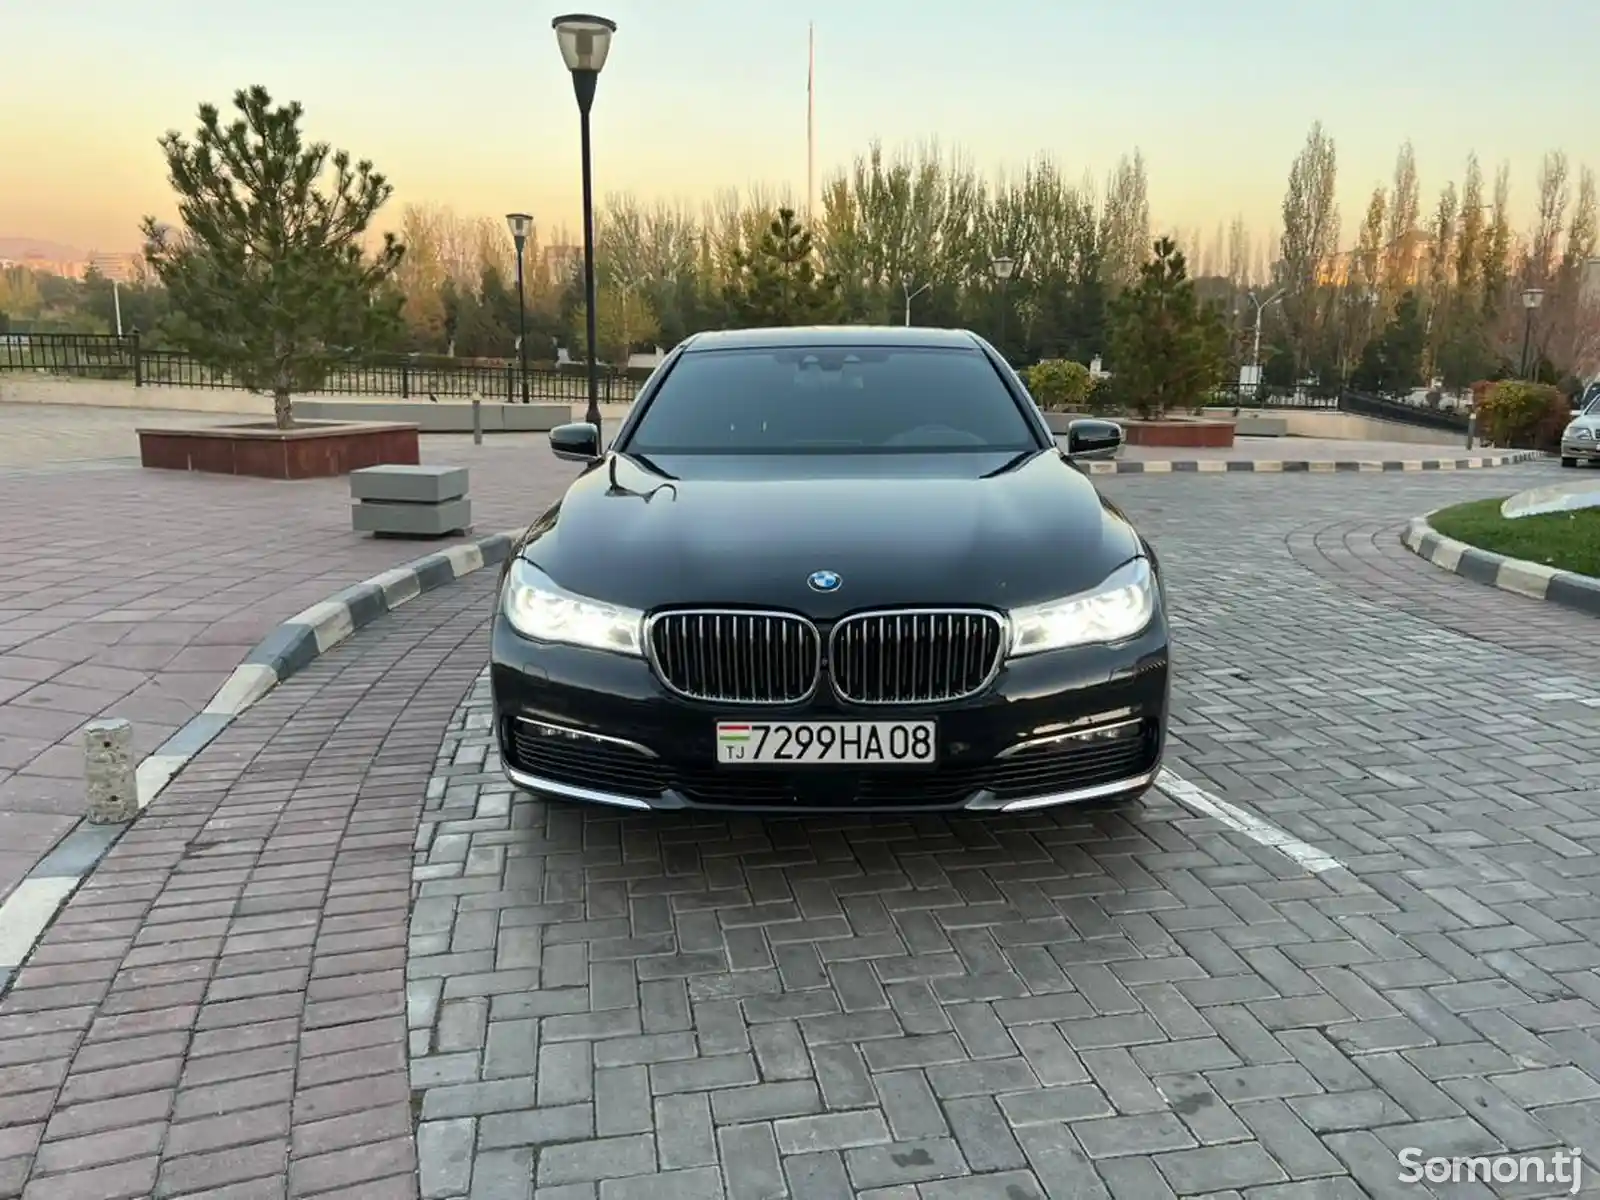 BMW 7 series, 2017-11